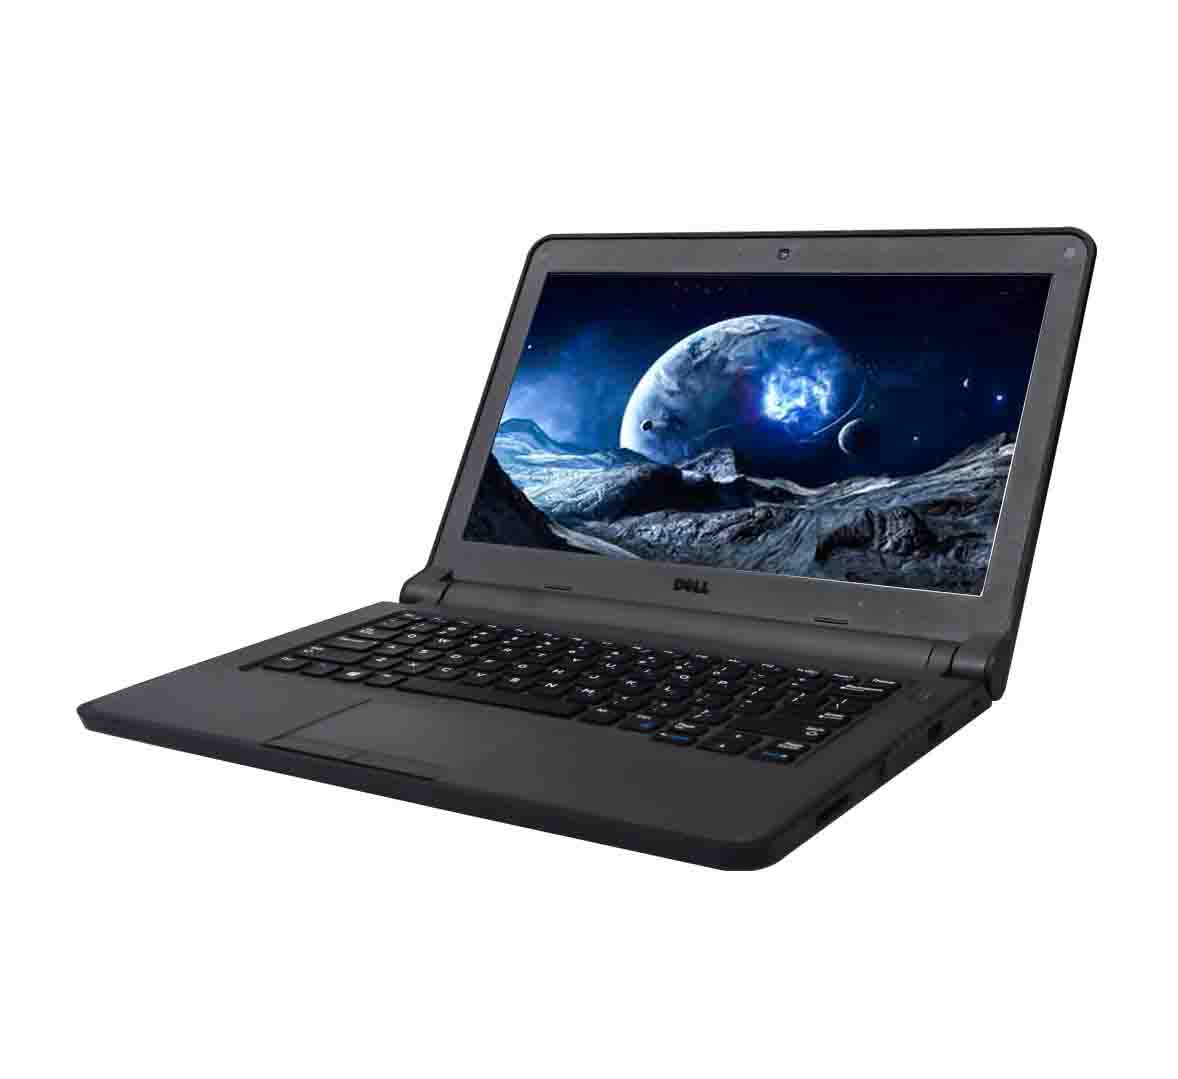 Dell Latitude 3340 Business Laptop, Intel Core i3-4th Gen. CPU, 4GB RAM, 250GB HDD, 13.3 inch Touchscreen, Windows 10 Pro, Refurbished Laptop